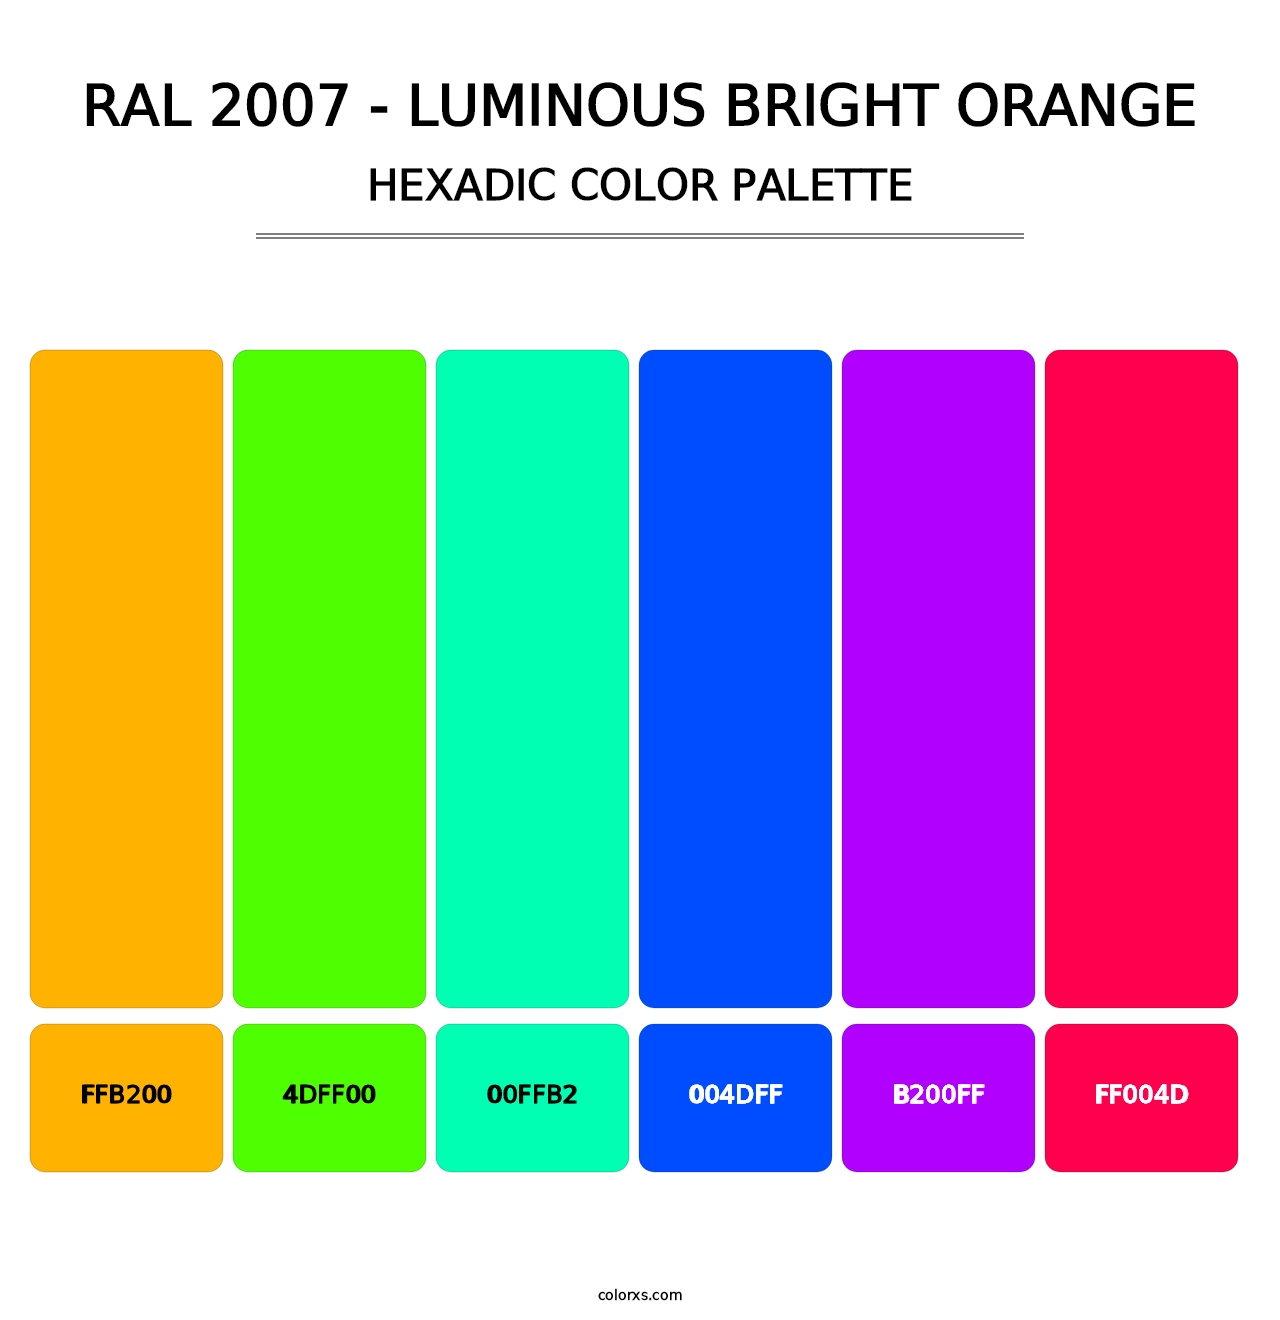 RAL 2007 - Luminous Bright Orange - Hexadic Color Palette